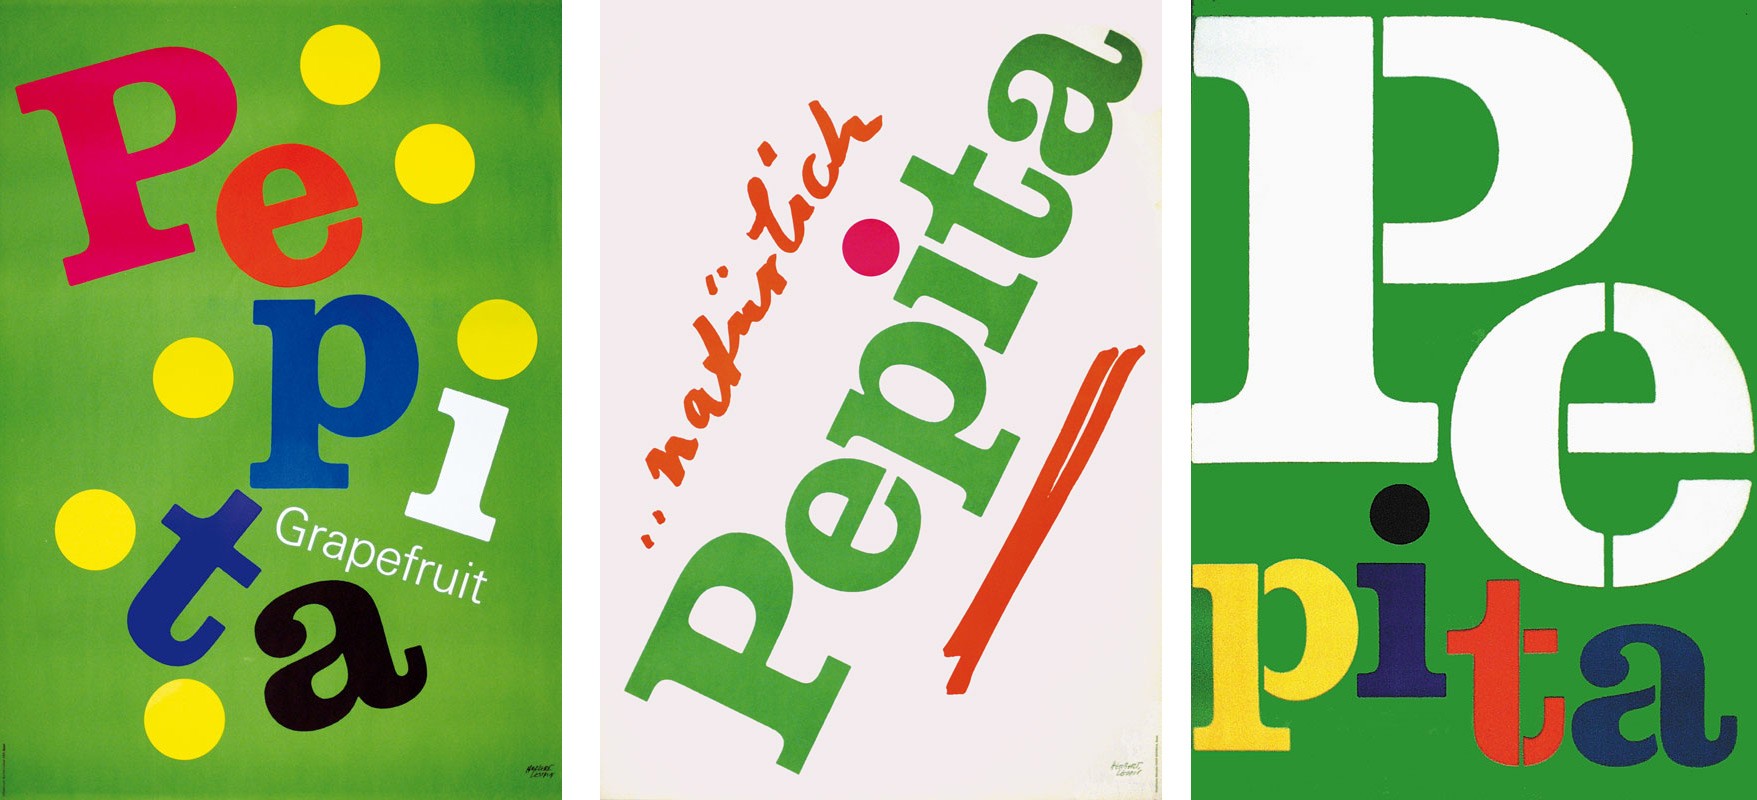 pepita-typographic-poster-leupin.jpg